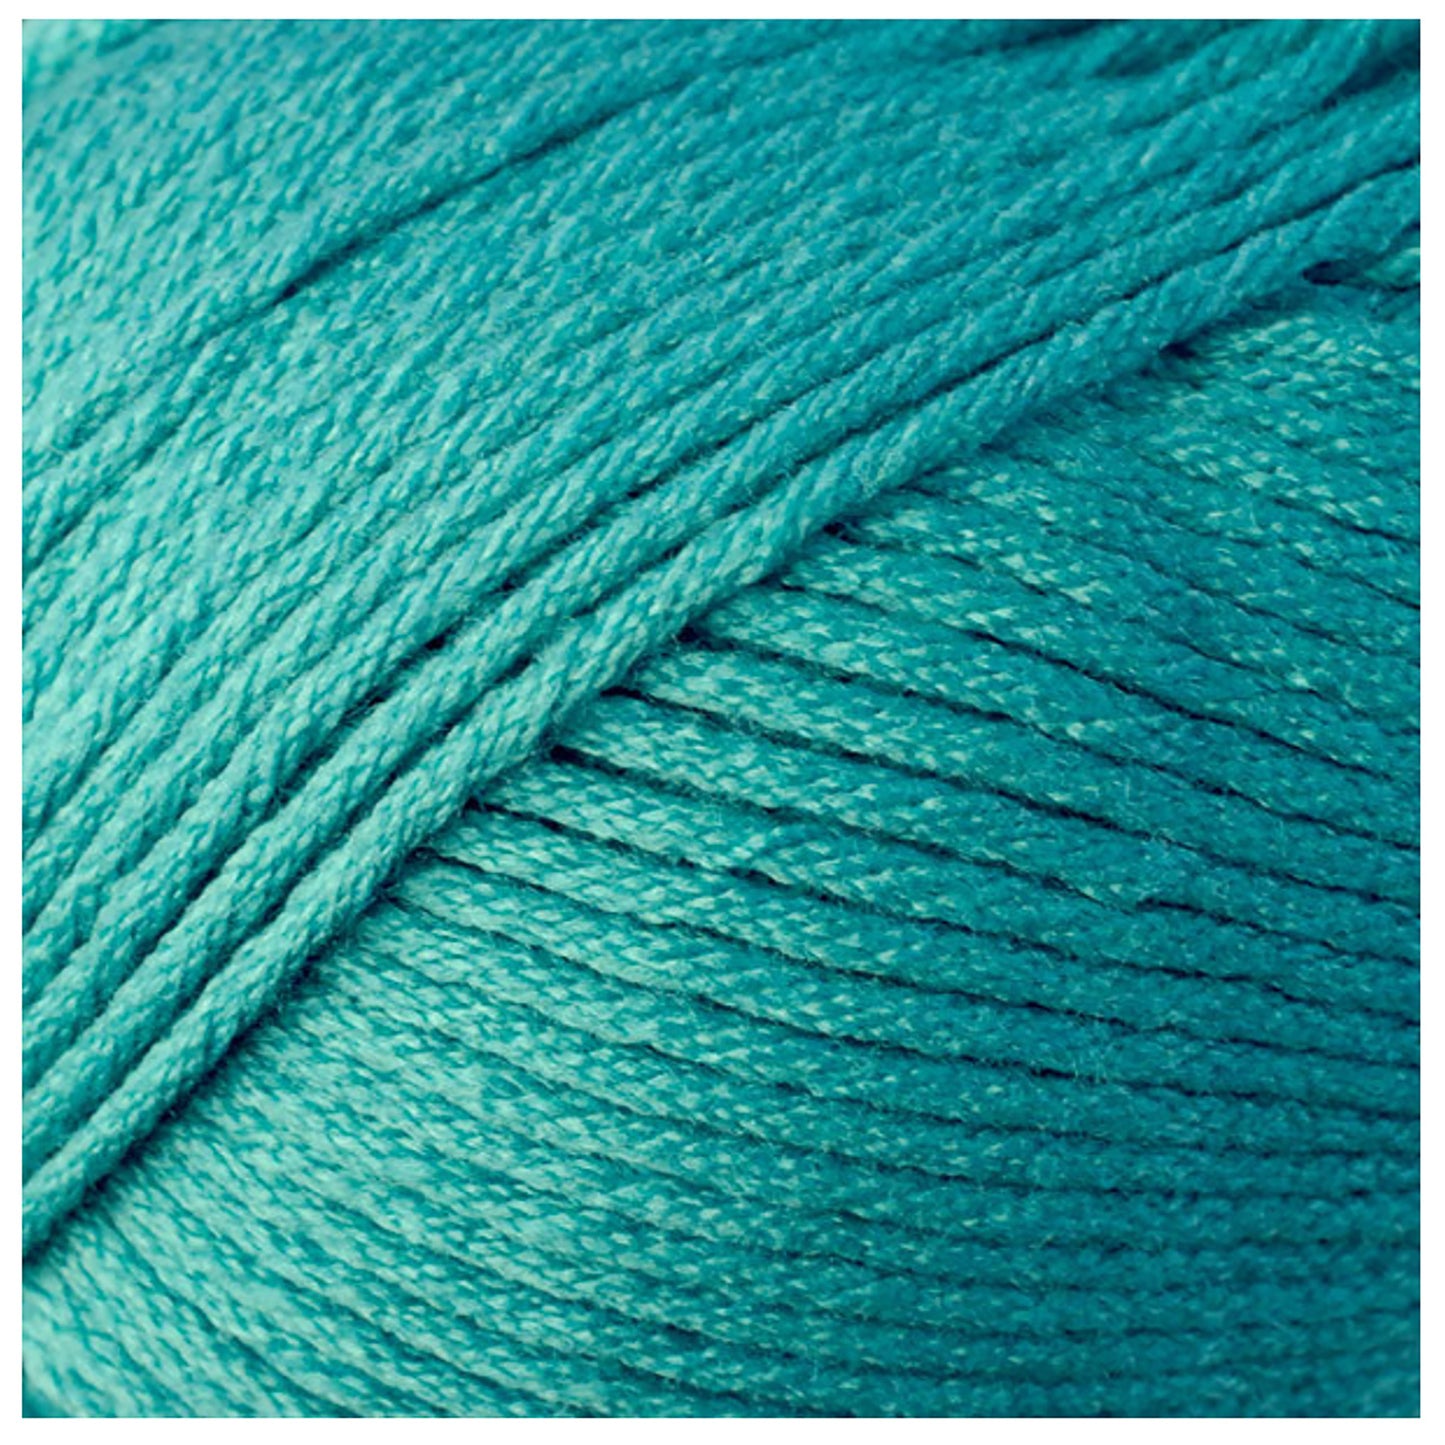 Colorful Crochet Skirt/Cowl - L/1X/2X/3X/4X - Dream Color Crochet Kit Alternative View #1